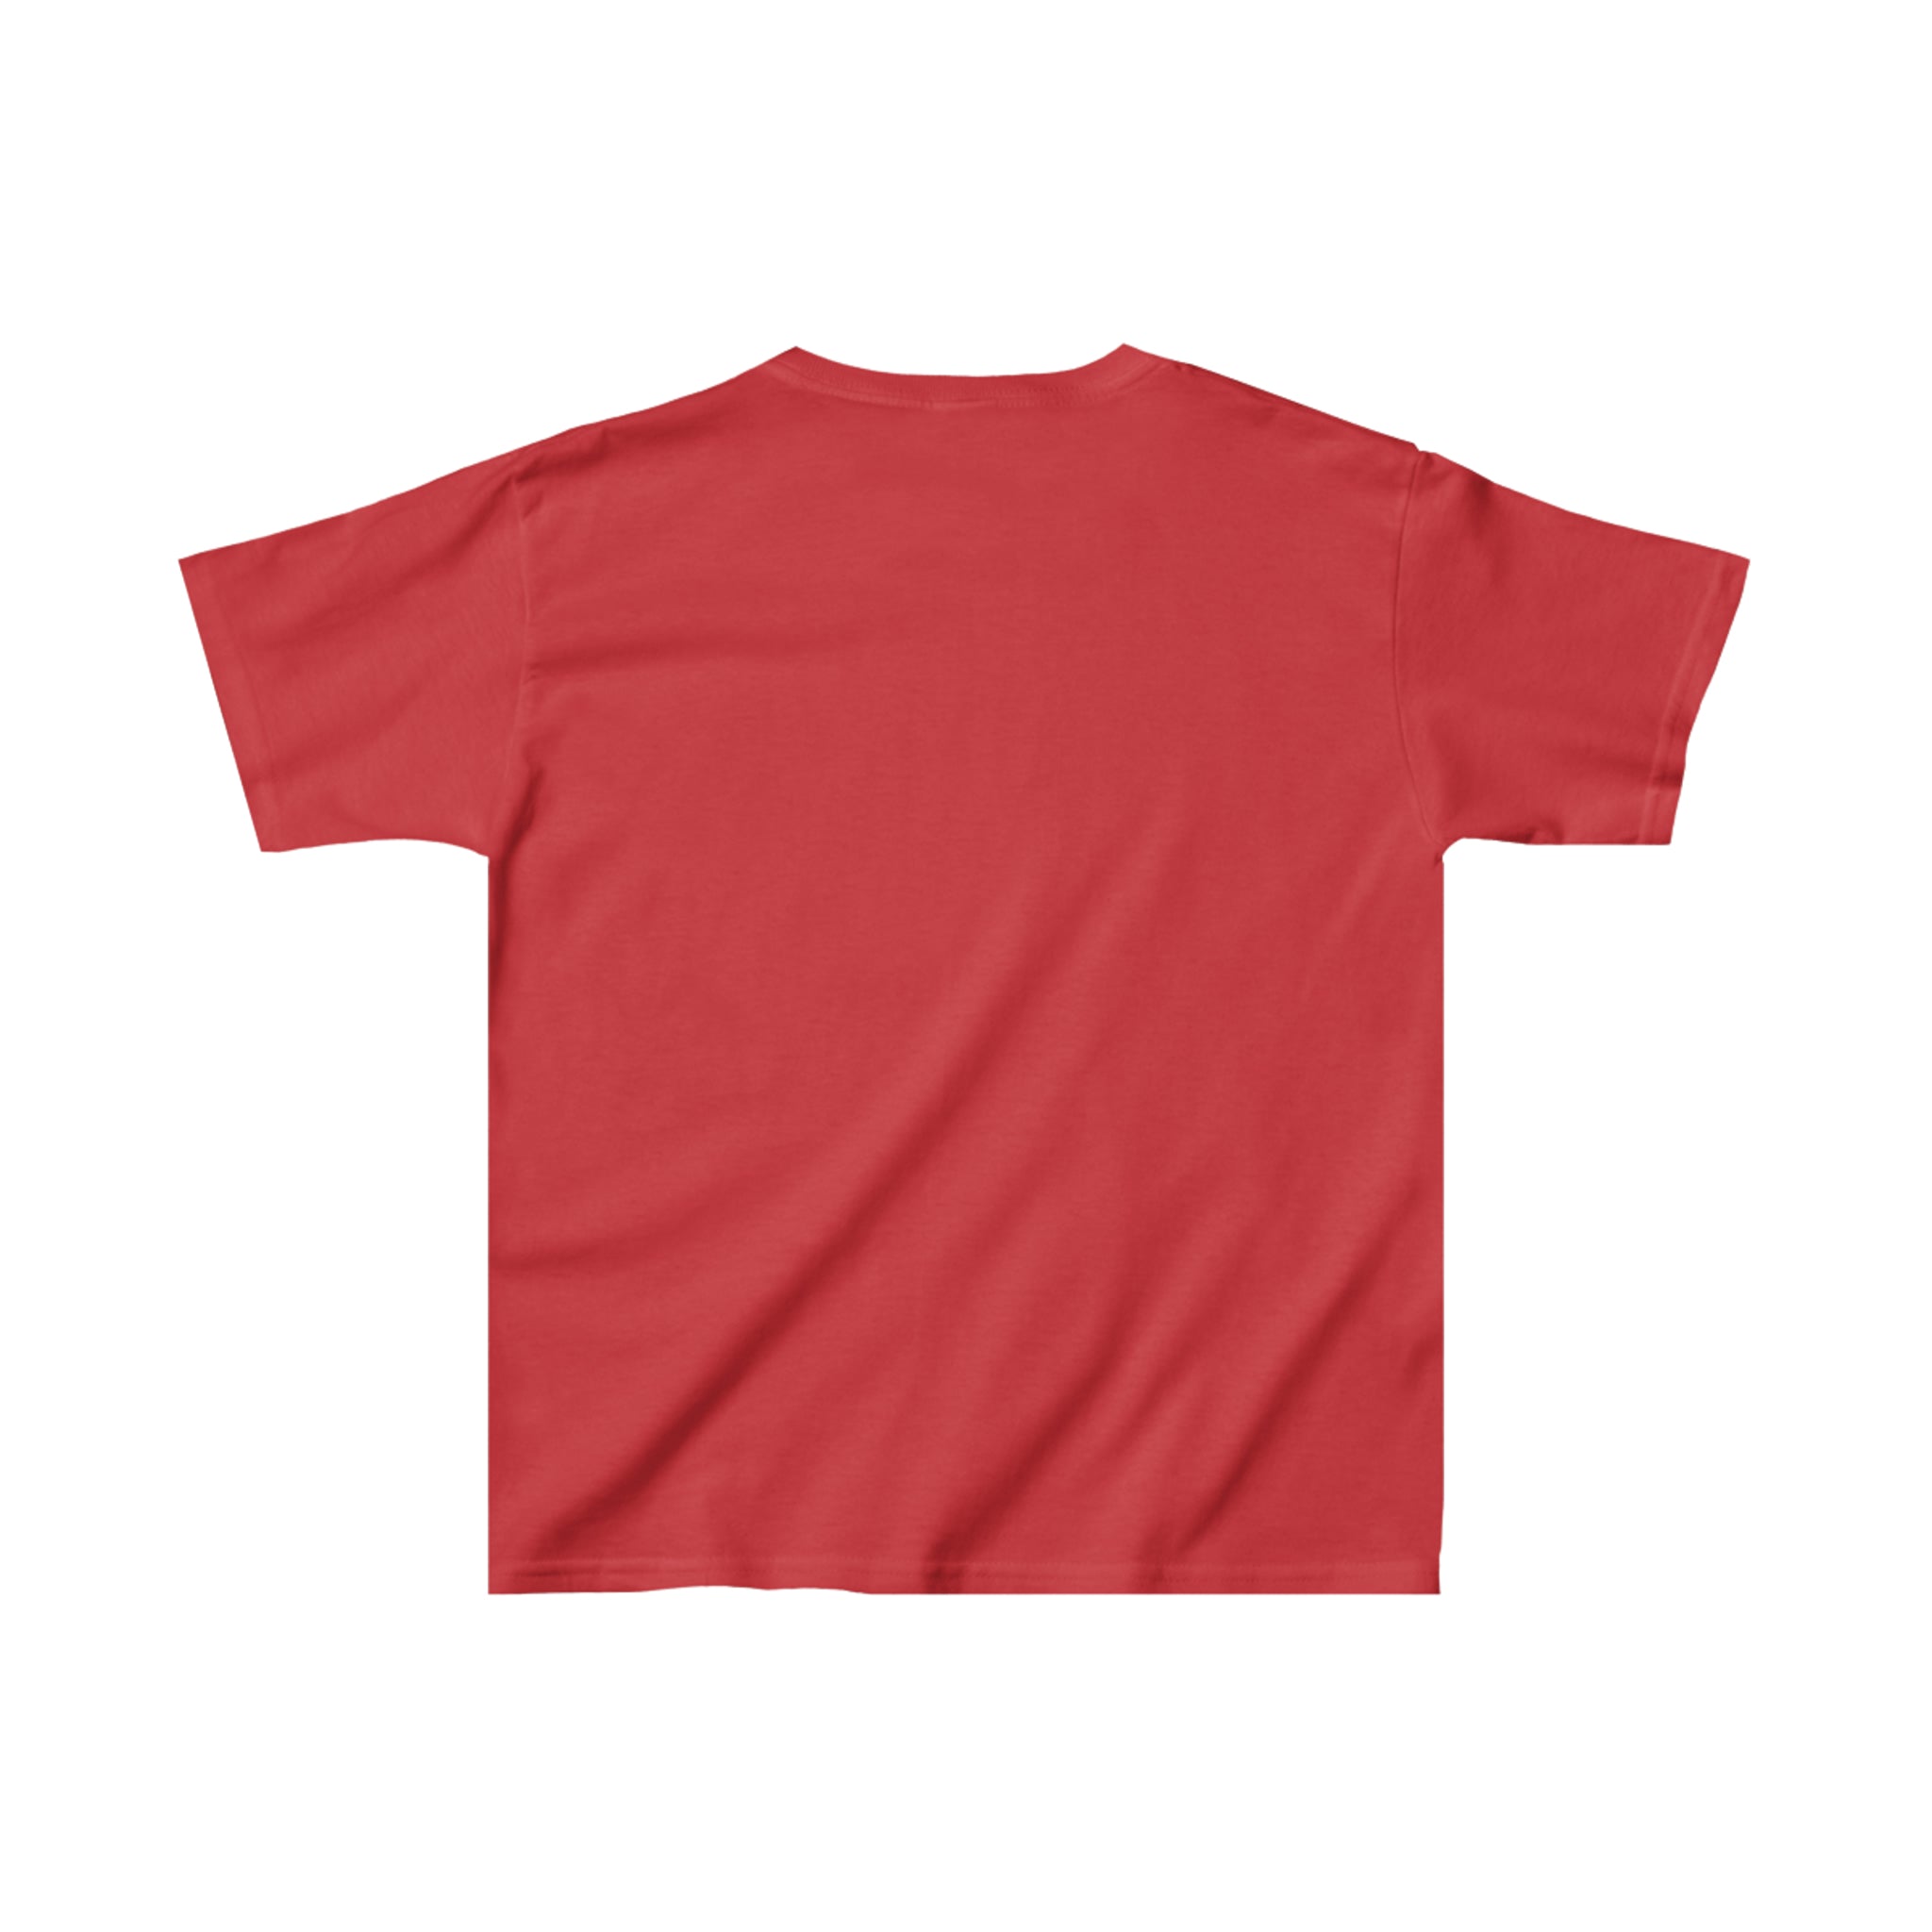 Abilene Aviators T-Shirt (Youth)